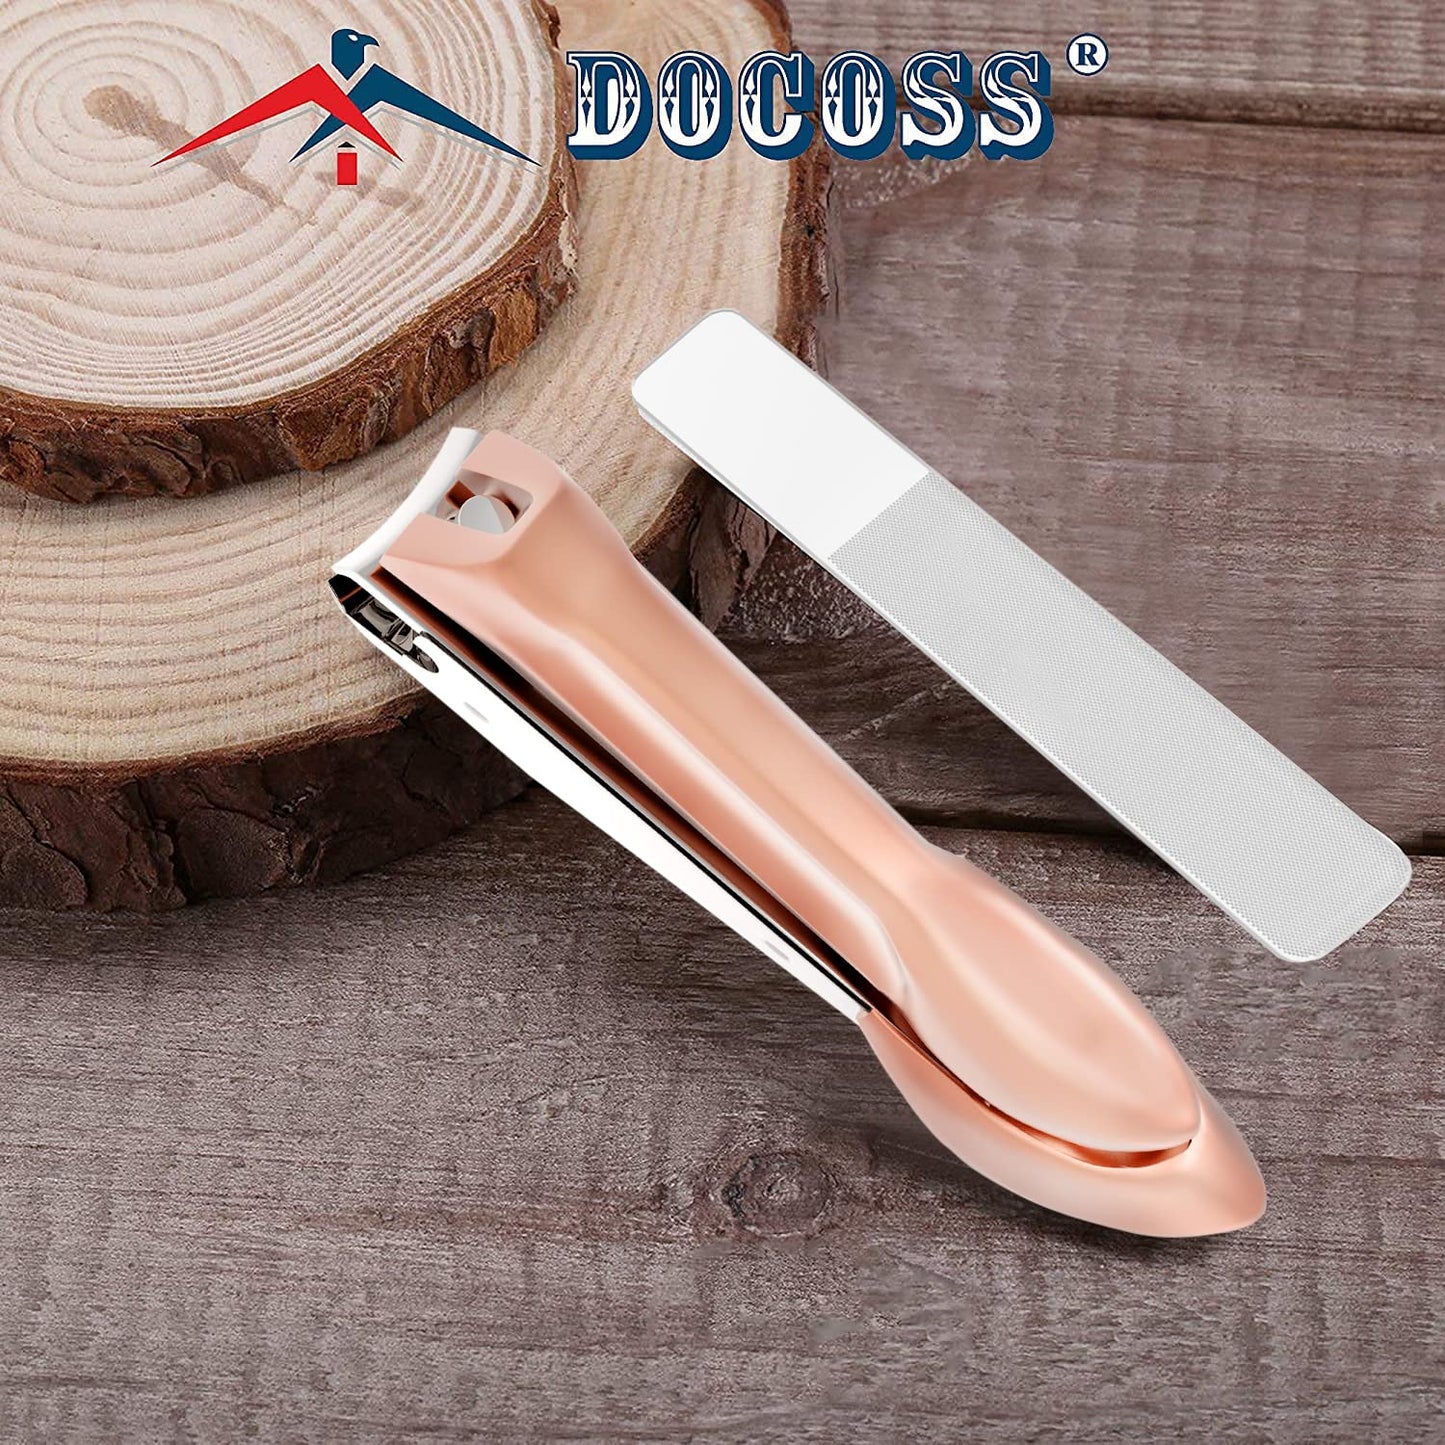 DOCOSS Professional Rose Gold Nail Cutter Kit Set With Filer & Toenail Fingernail Clipper Stainless Steel Nail Clipper Set / Nail Cutter For Men Women (Rose Gold)